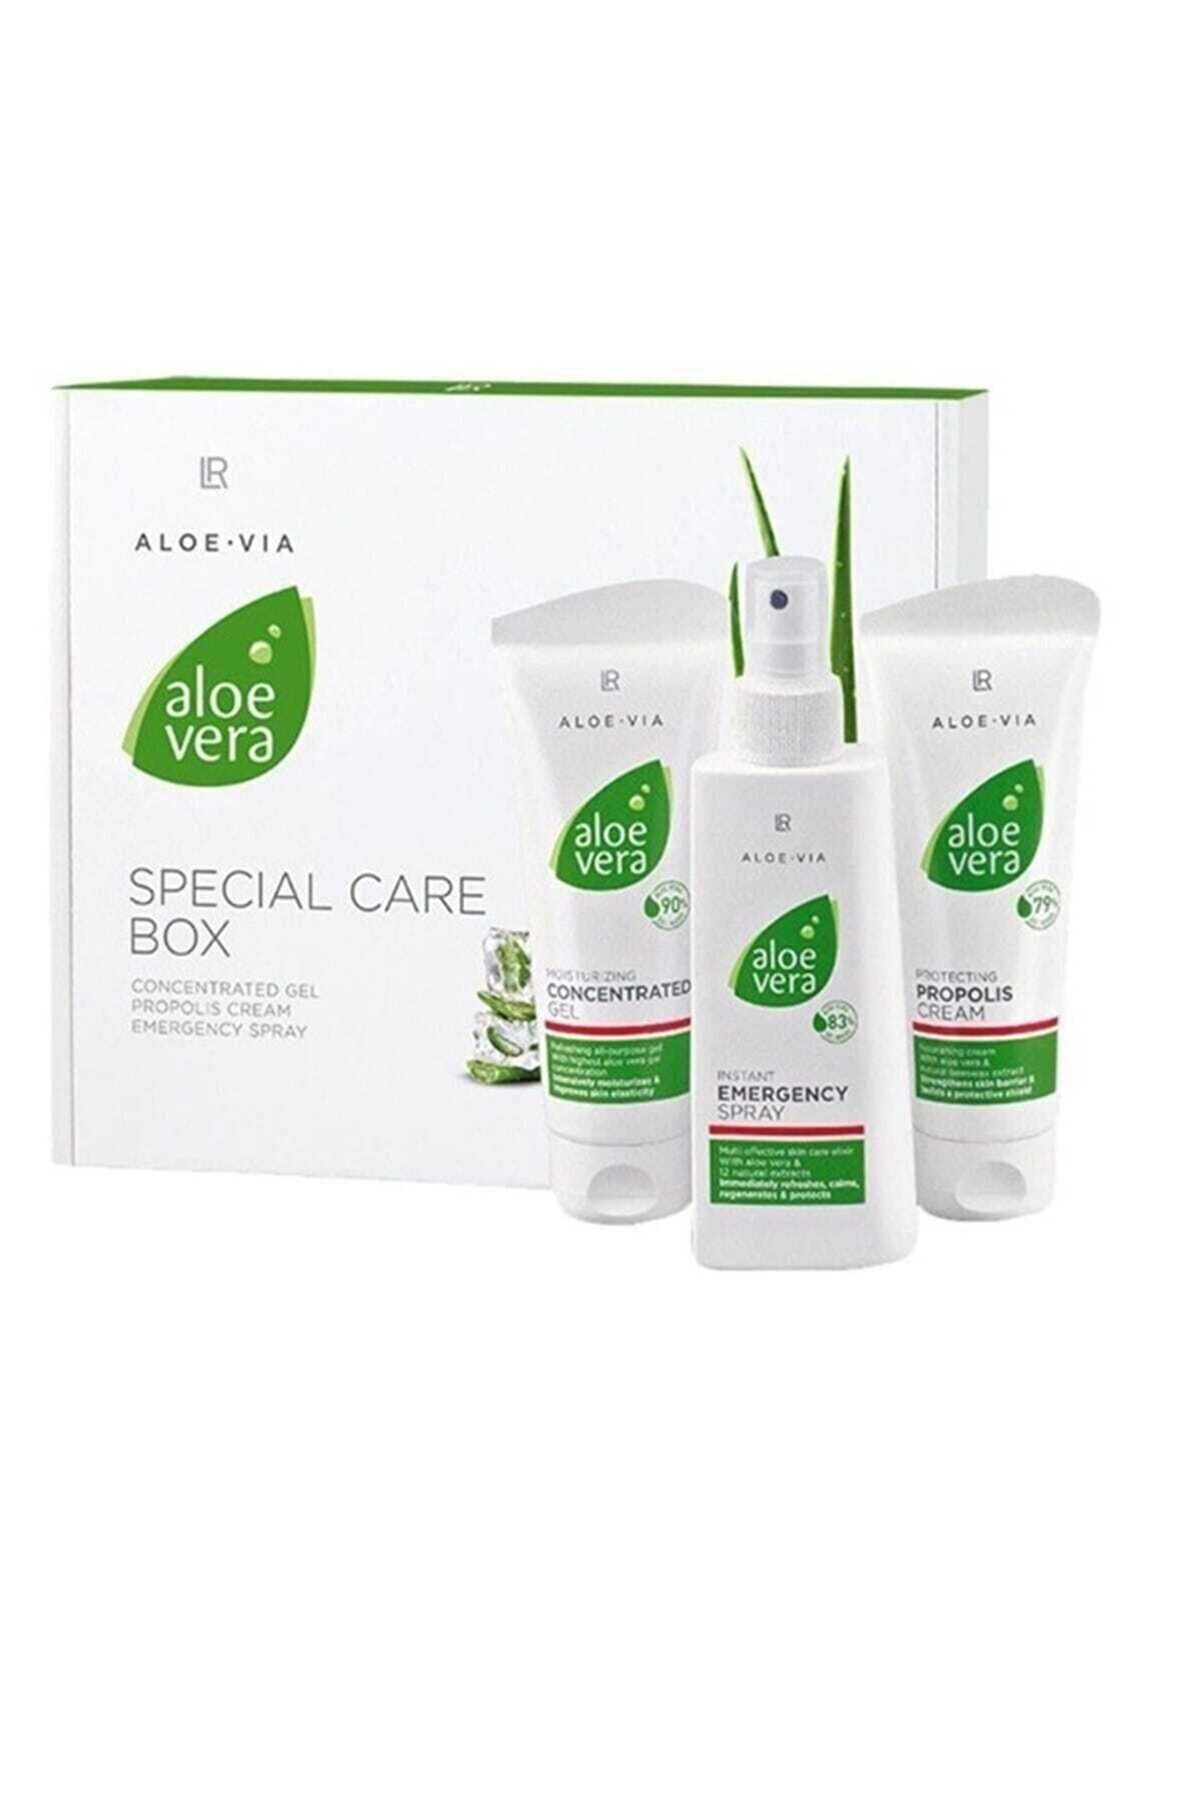 LR Aloe Via Aloe Vera Special Care Box Acil Durum Ilk Yardım Seti Ty20650101